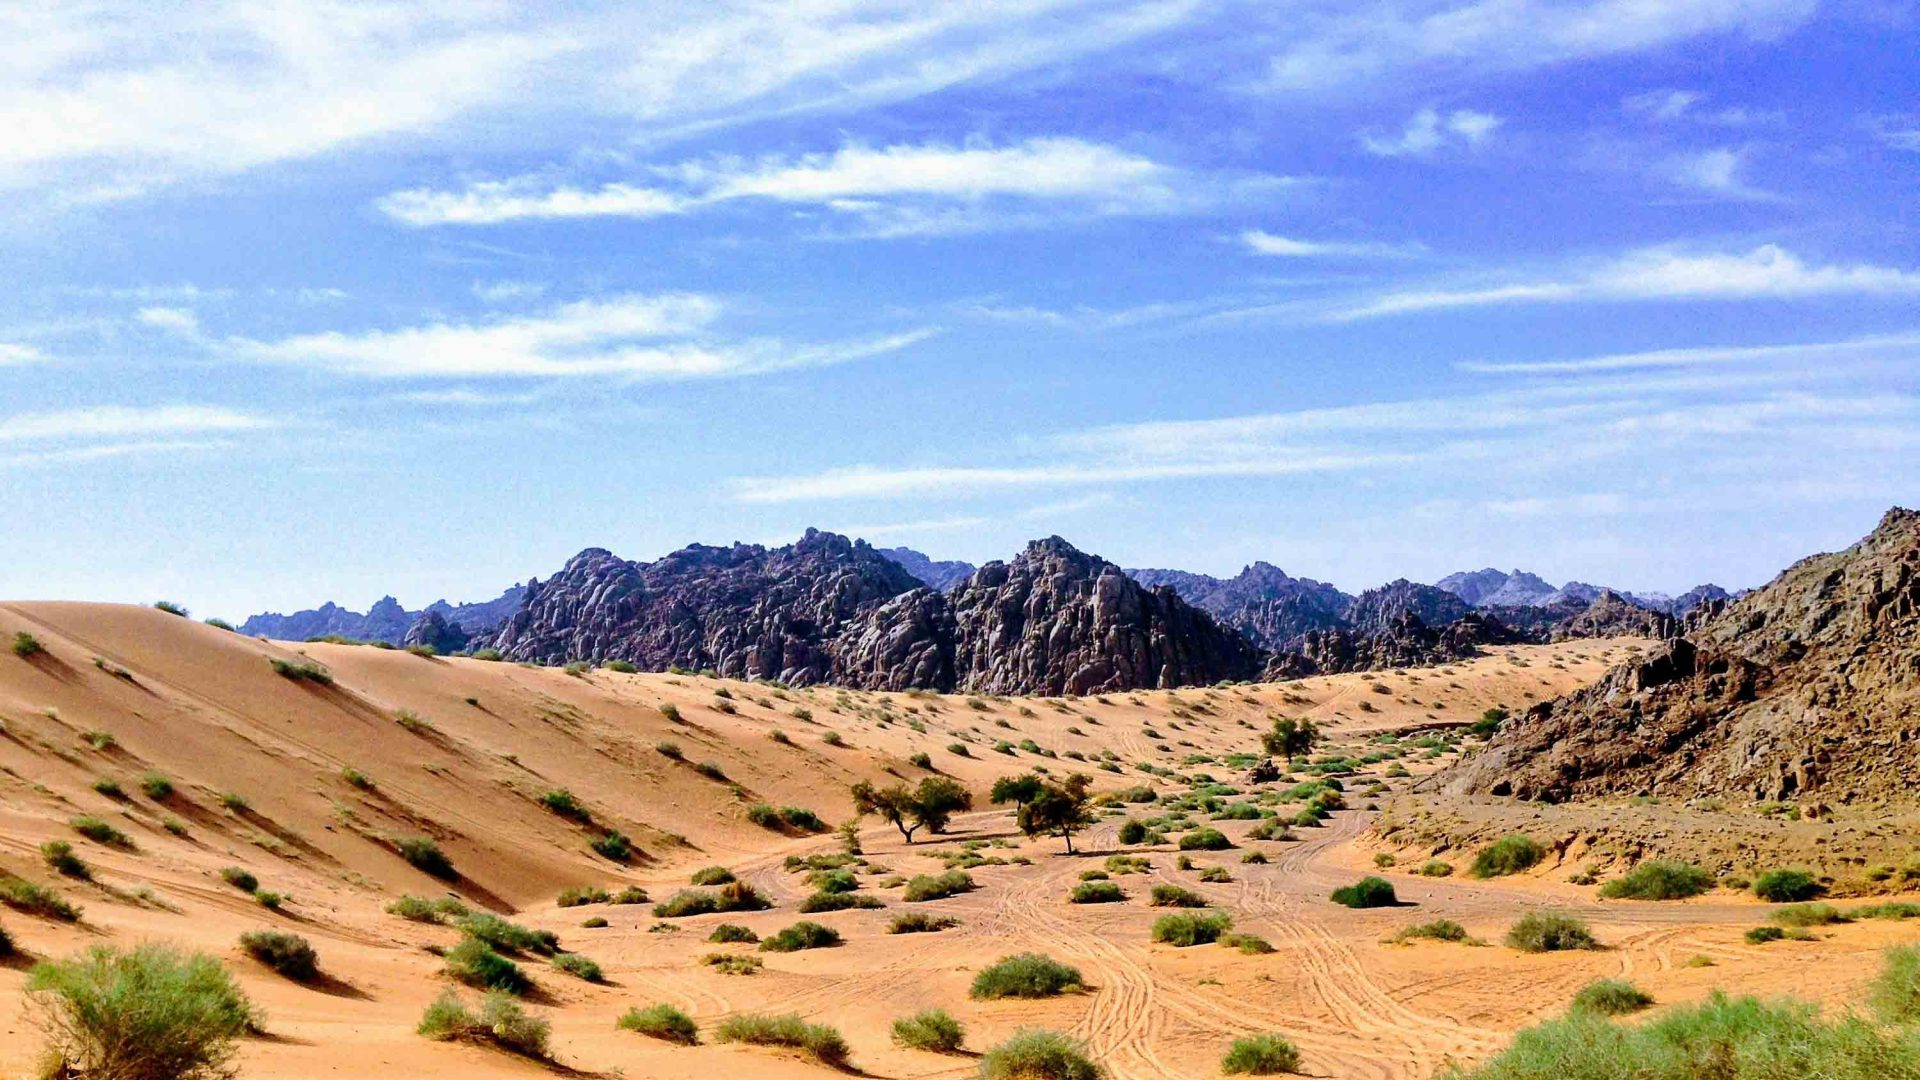 Desert with rocks, sand and green shrubs.